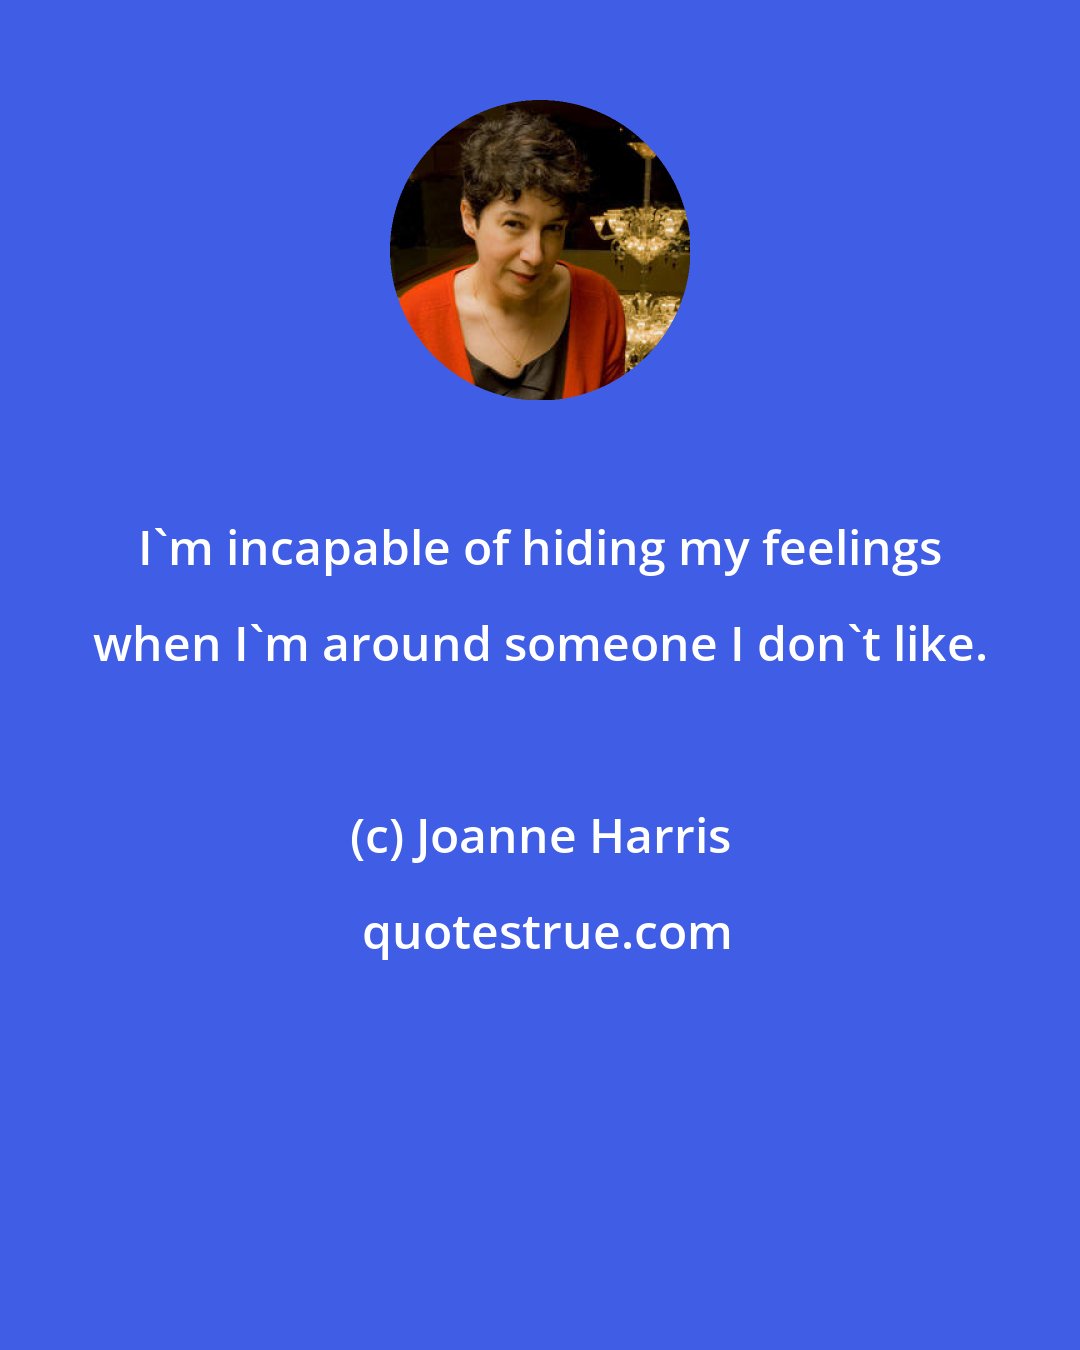 Joanne Harris: I'm incapable of hiding my feelings when I'm around someone I don't like.